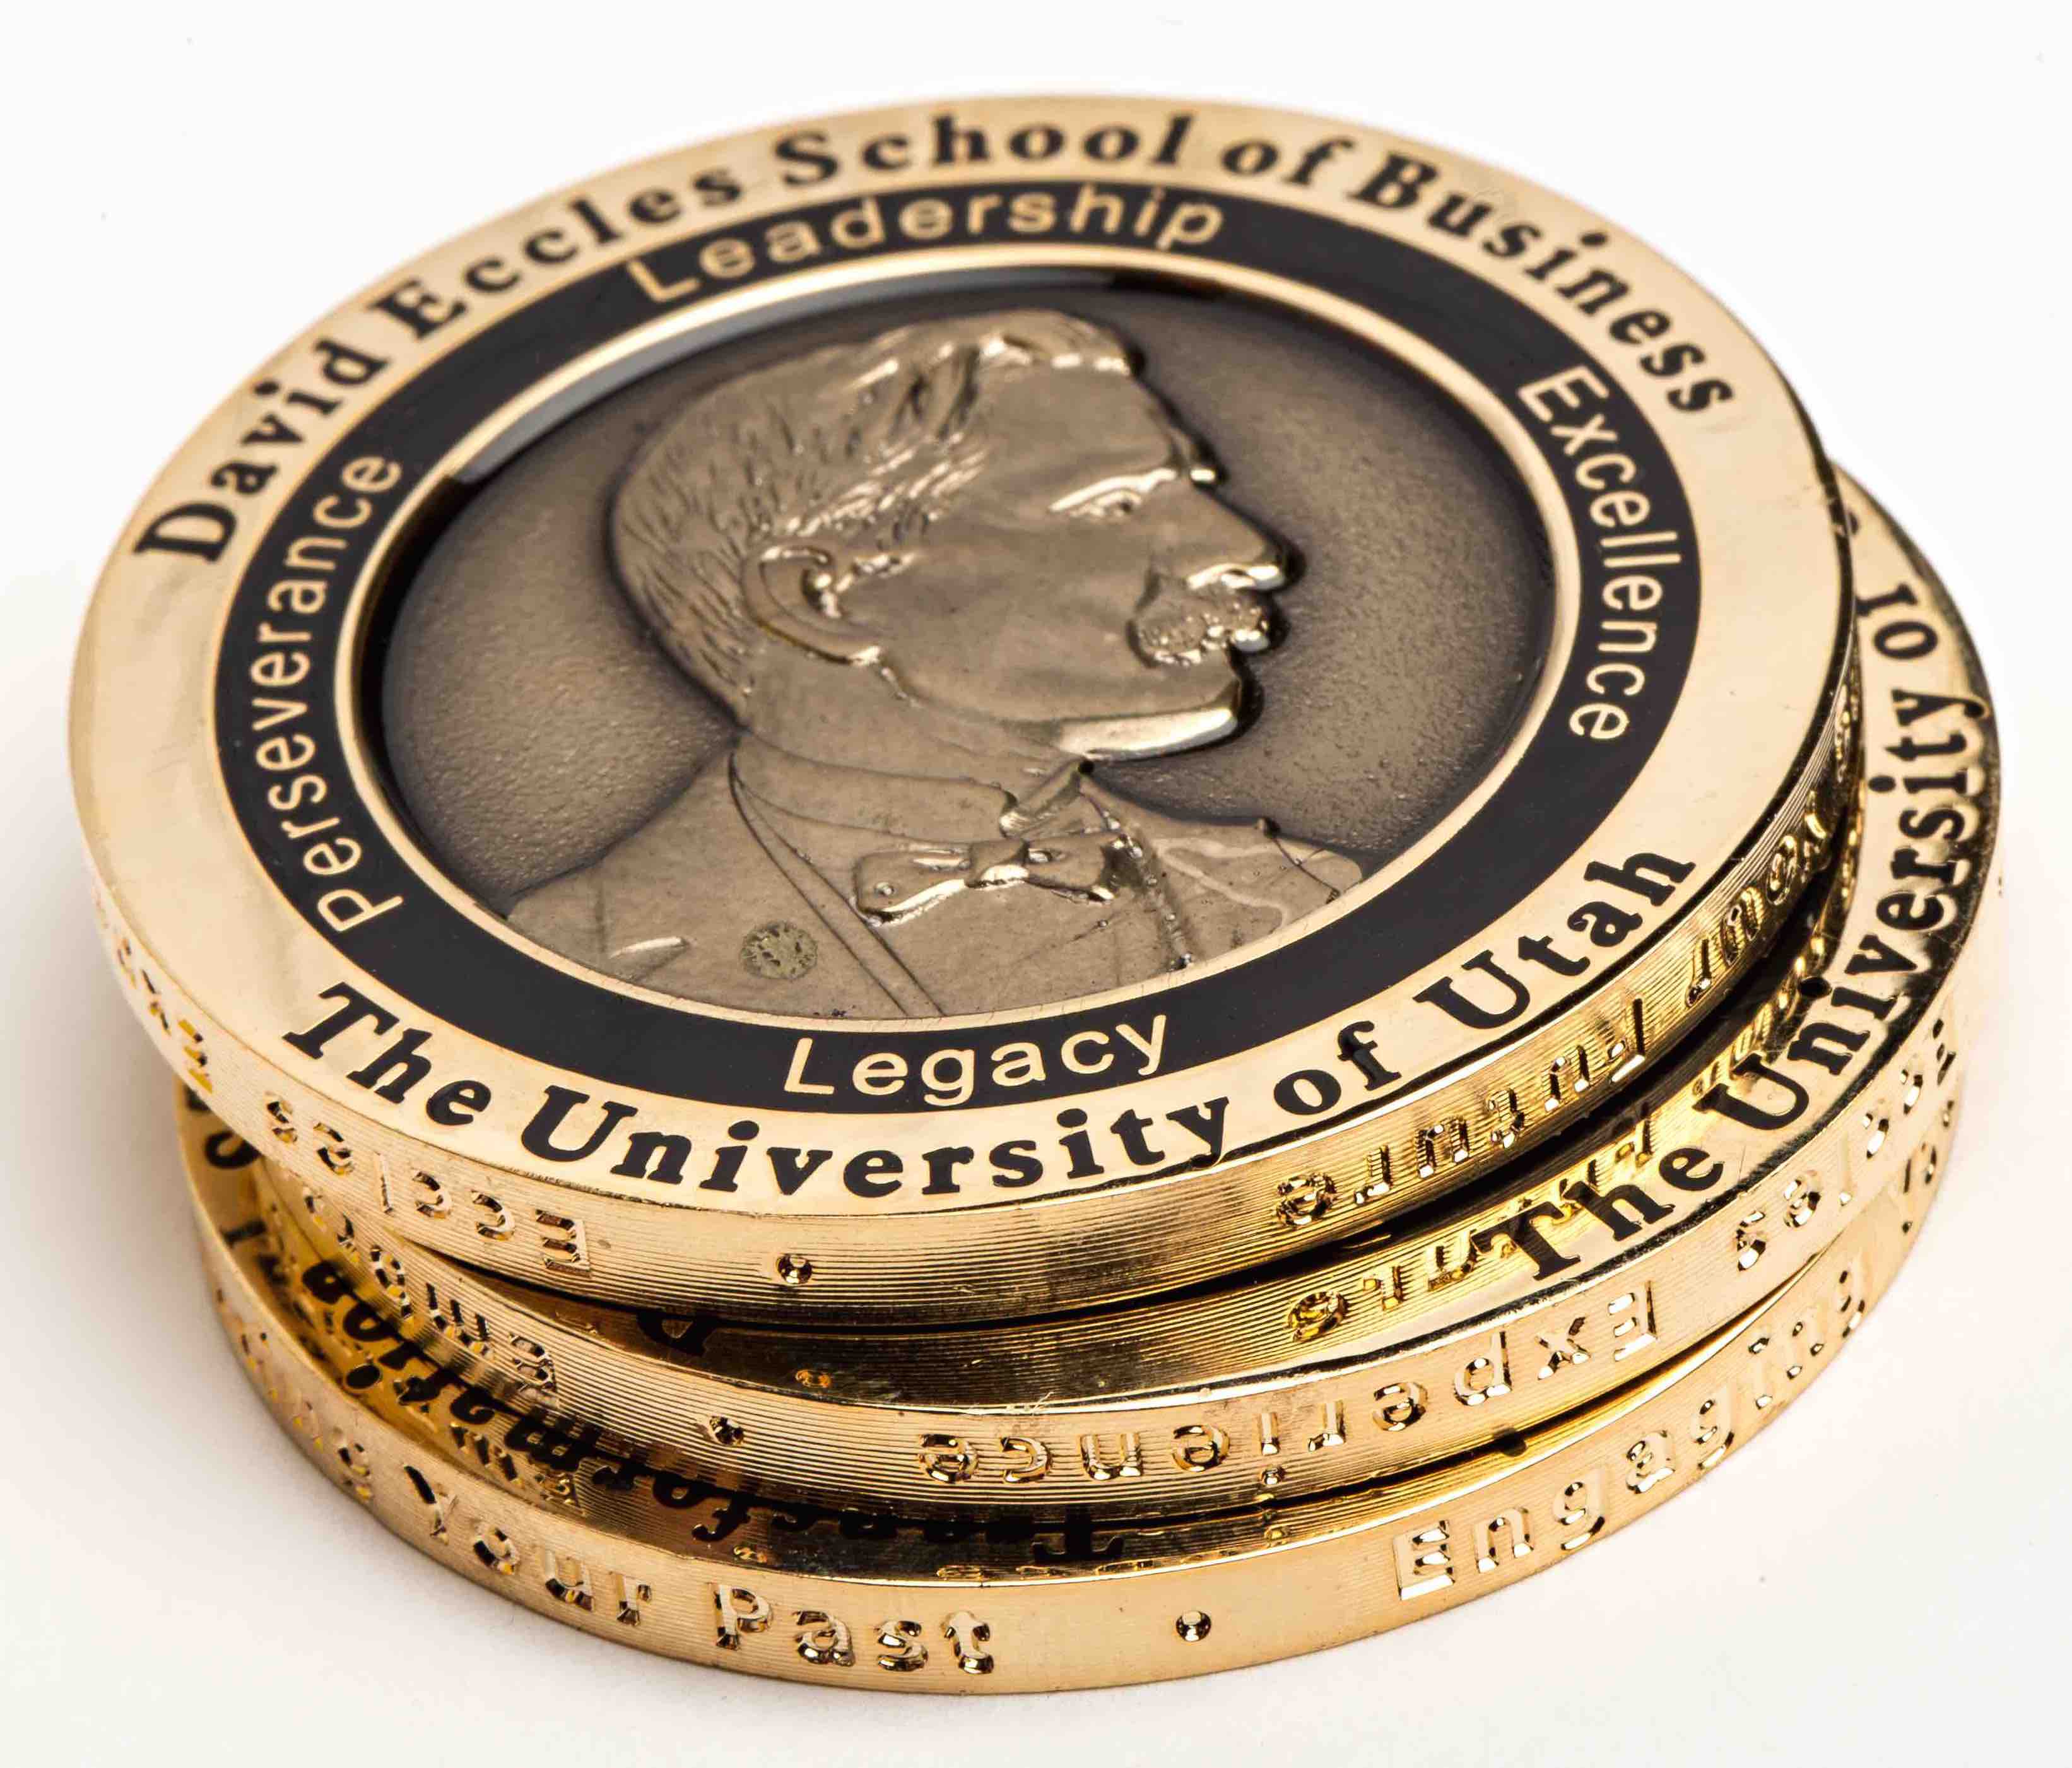 The David Eccles Coin honors the school's namesake, values